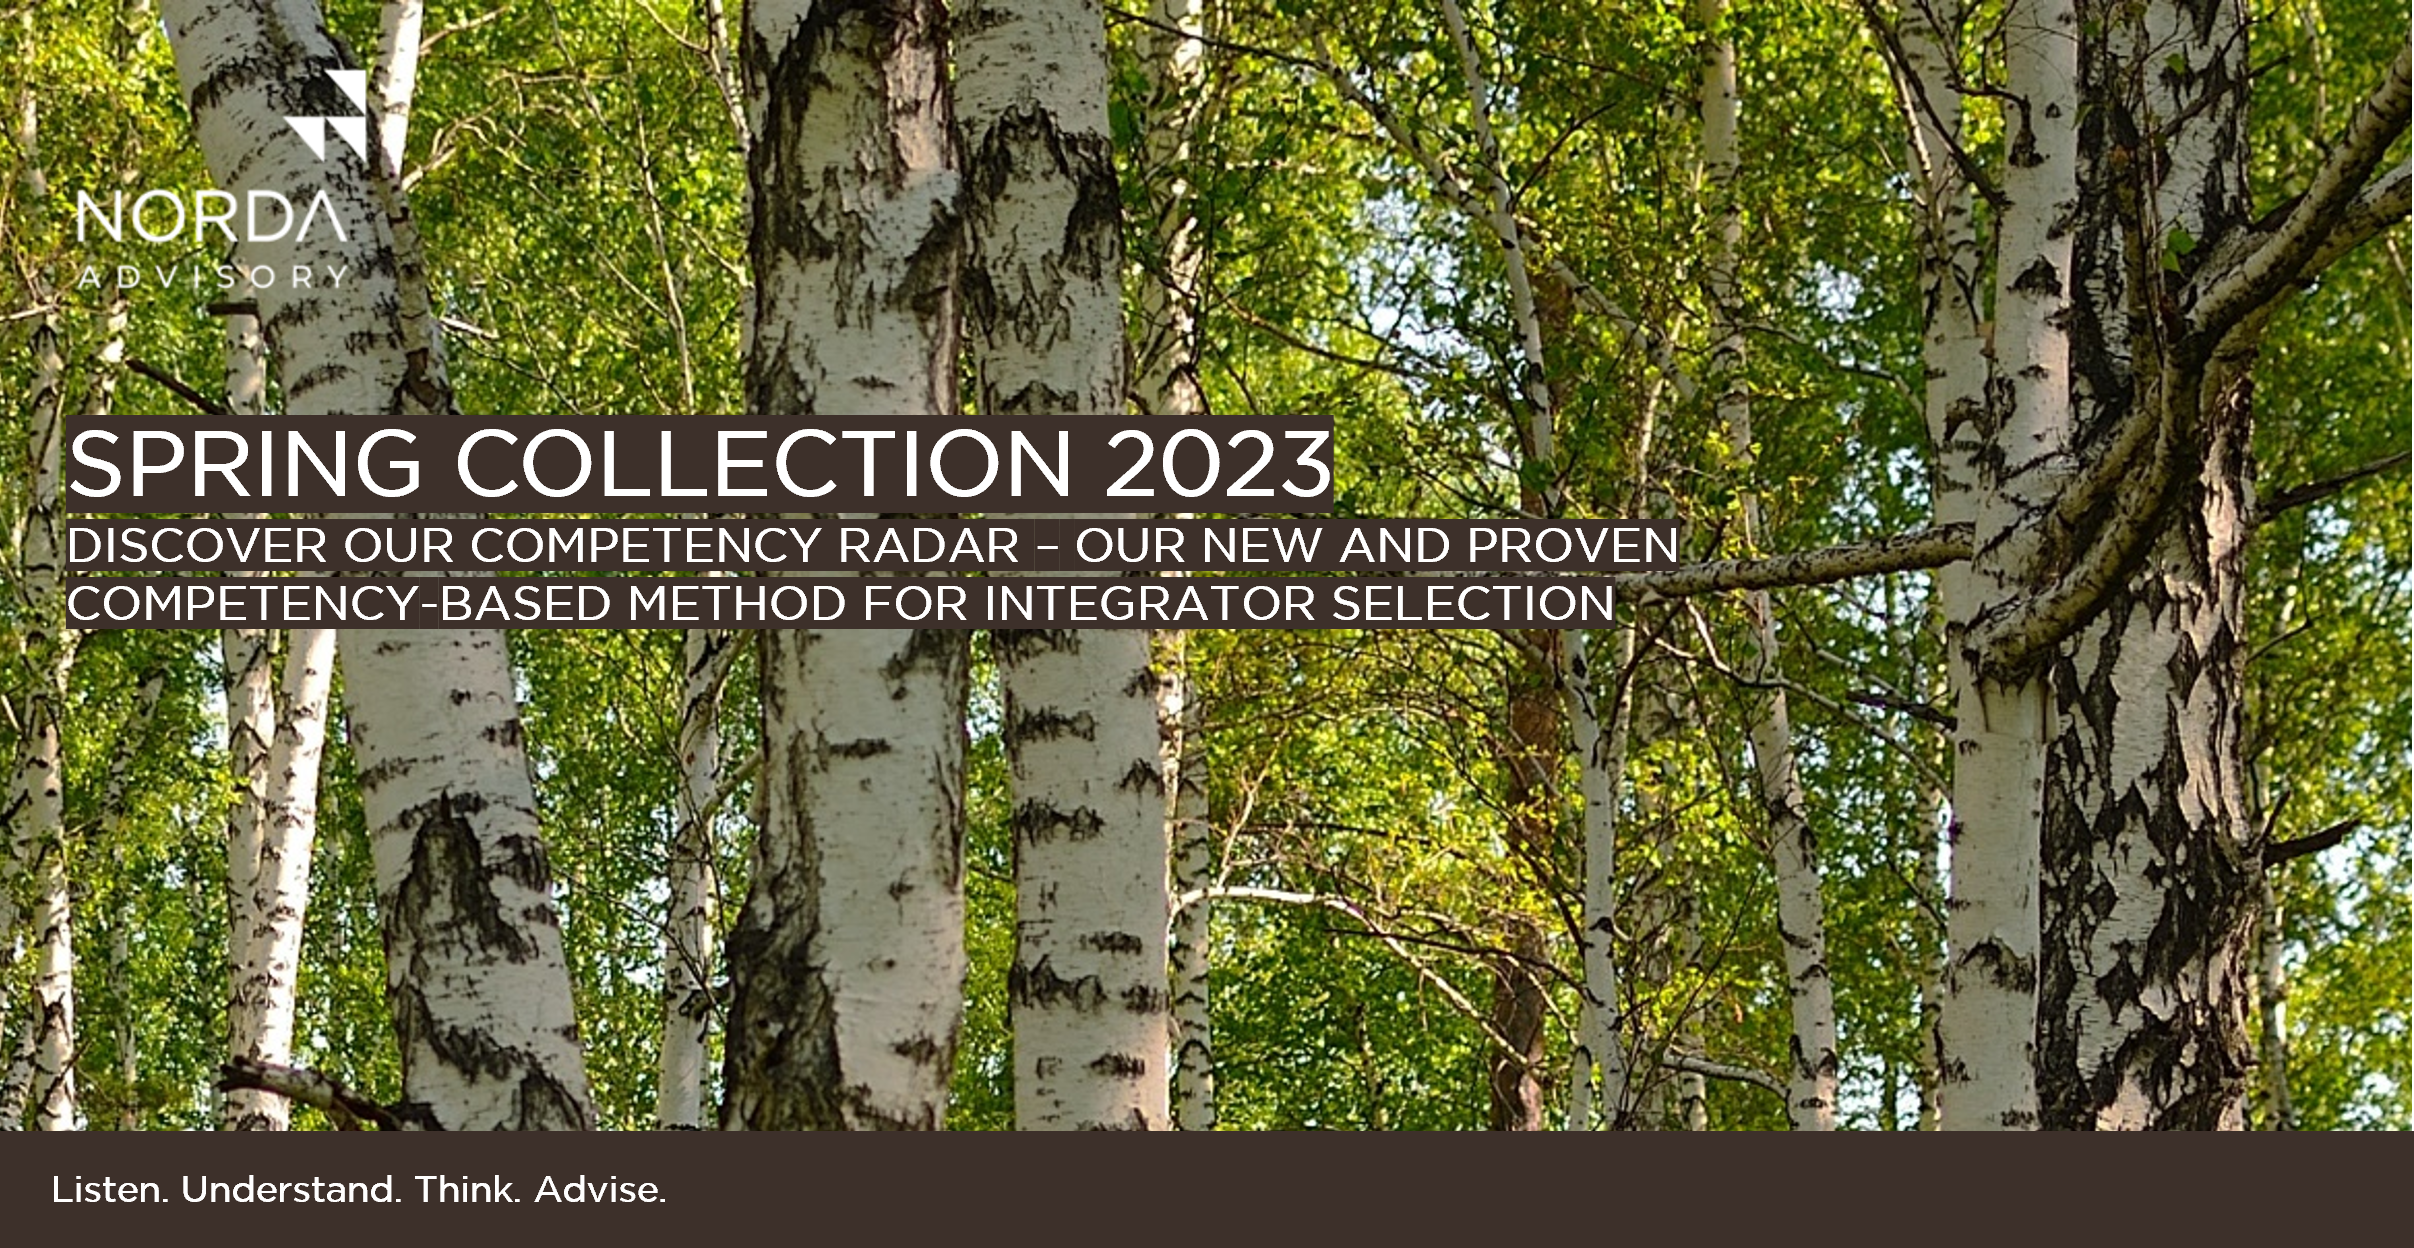 Spring 2023 Seasonal Collection “Competency Radar” (Integrator Selection)